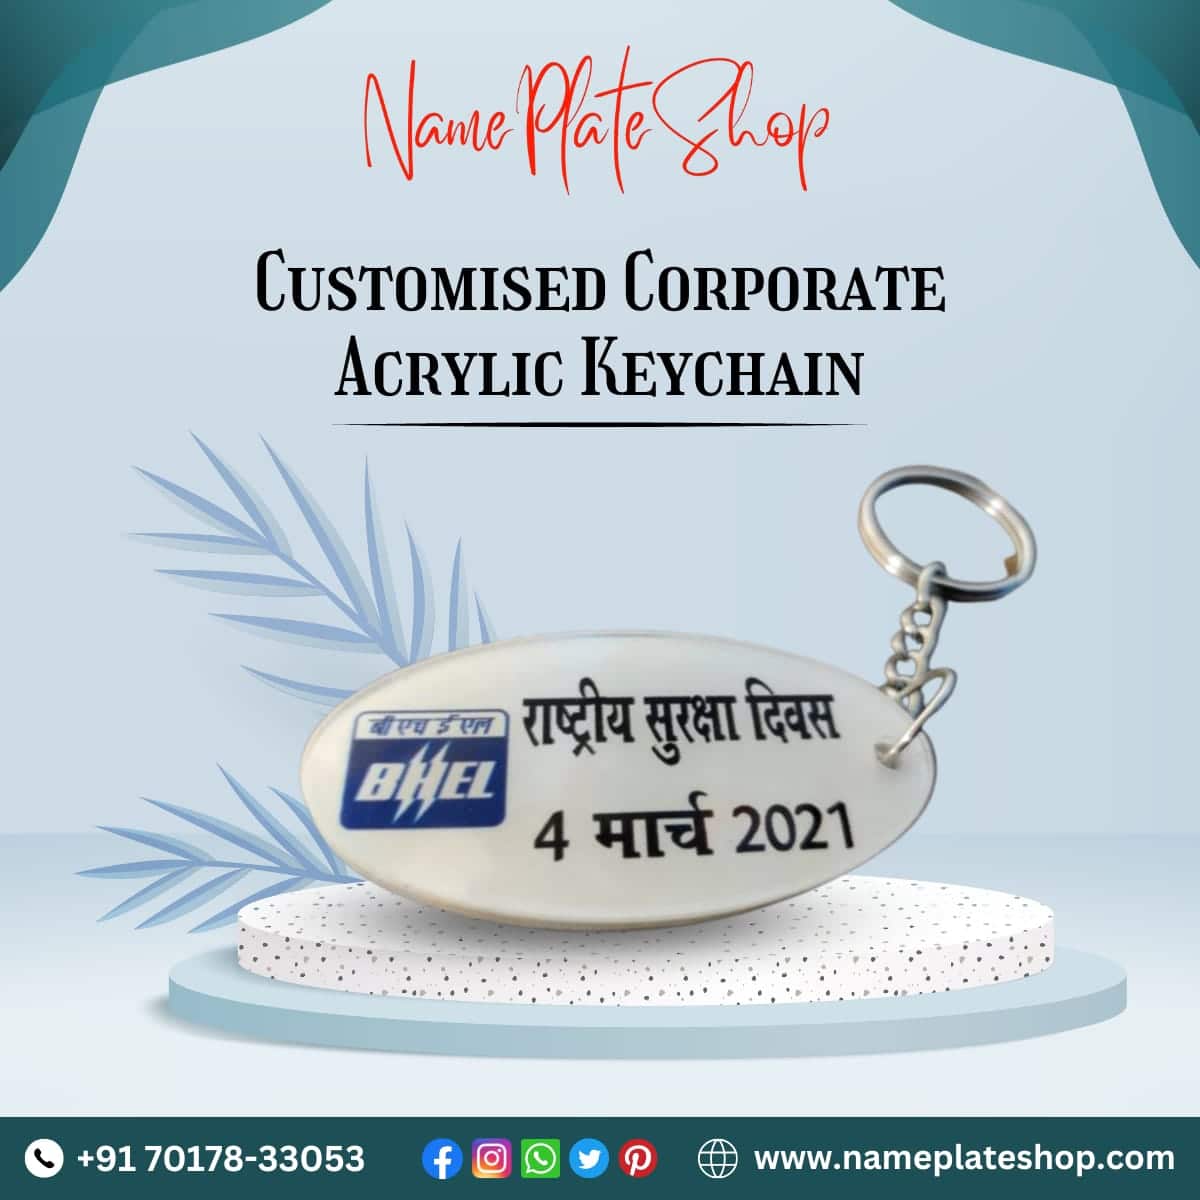 Customized Corporate Acrylic Keychain Corporate Gift